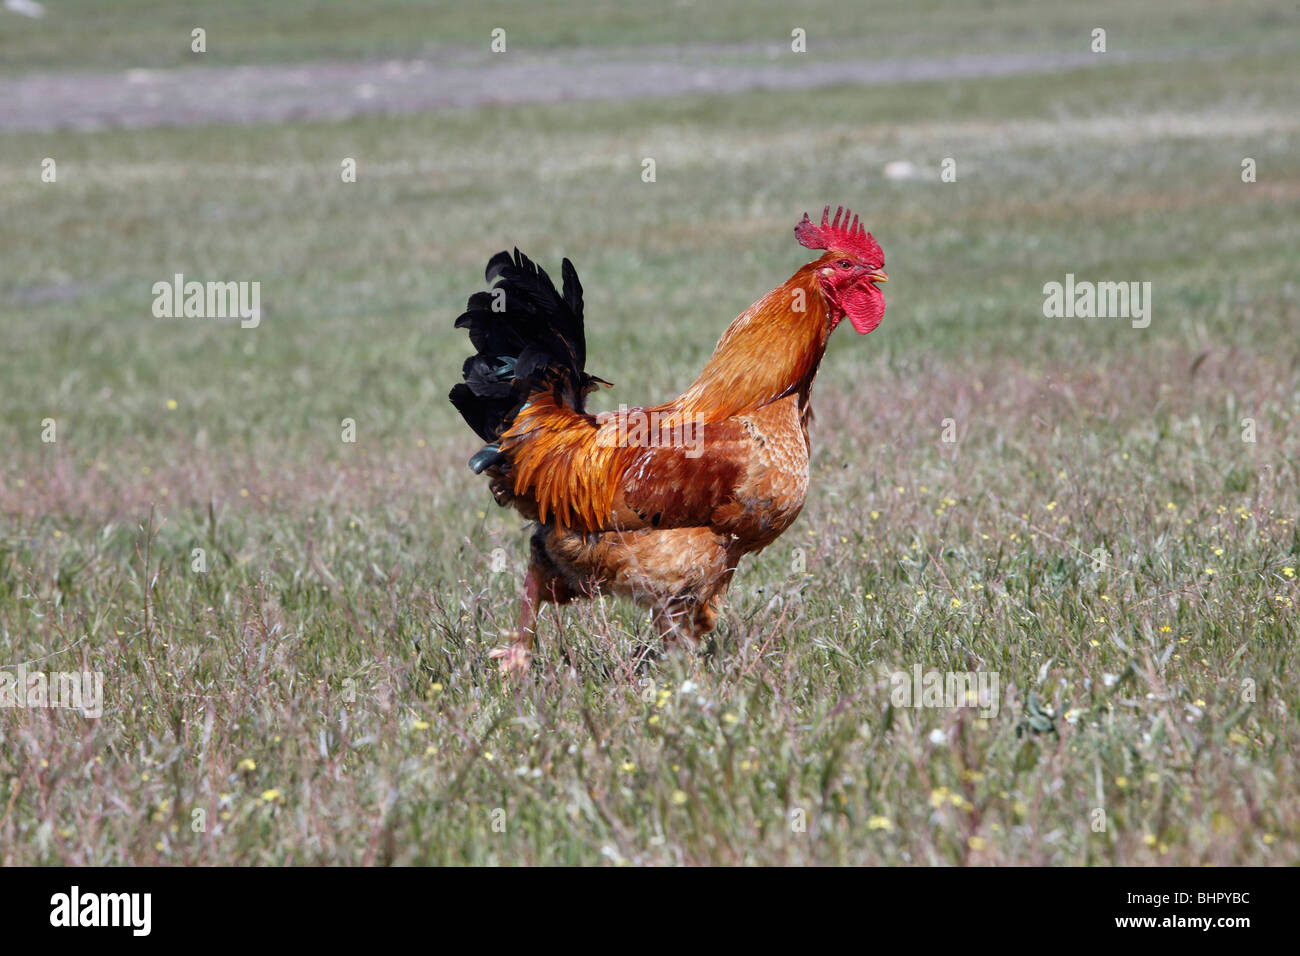 Gallo - corriendo a través de pradera, Portugal Foto de stock